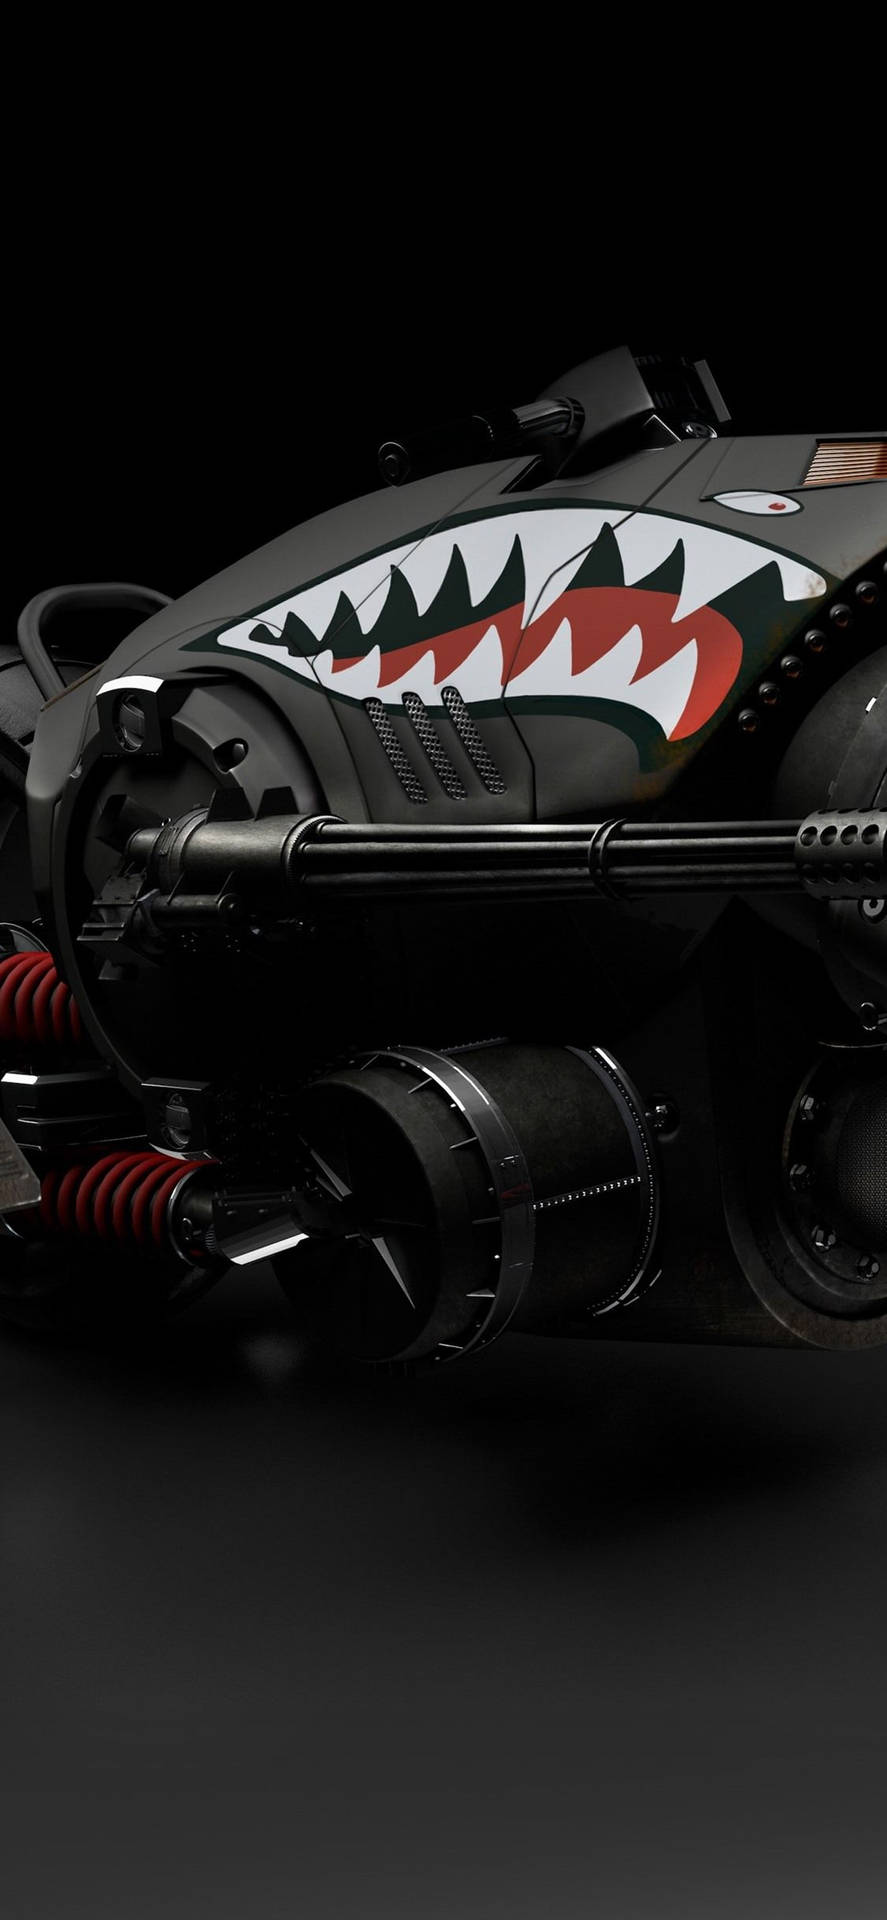 Shark Gas Tank Bikes Iphone